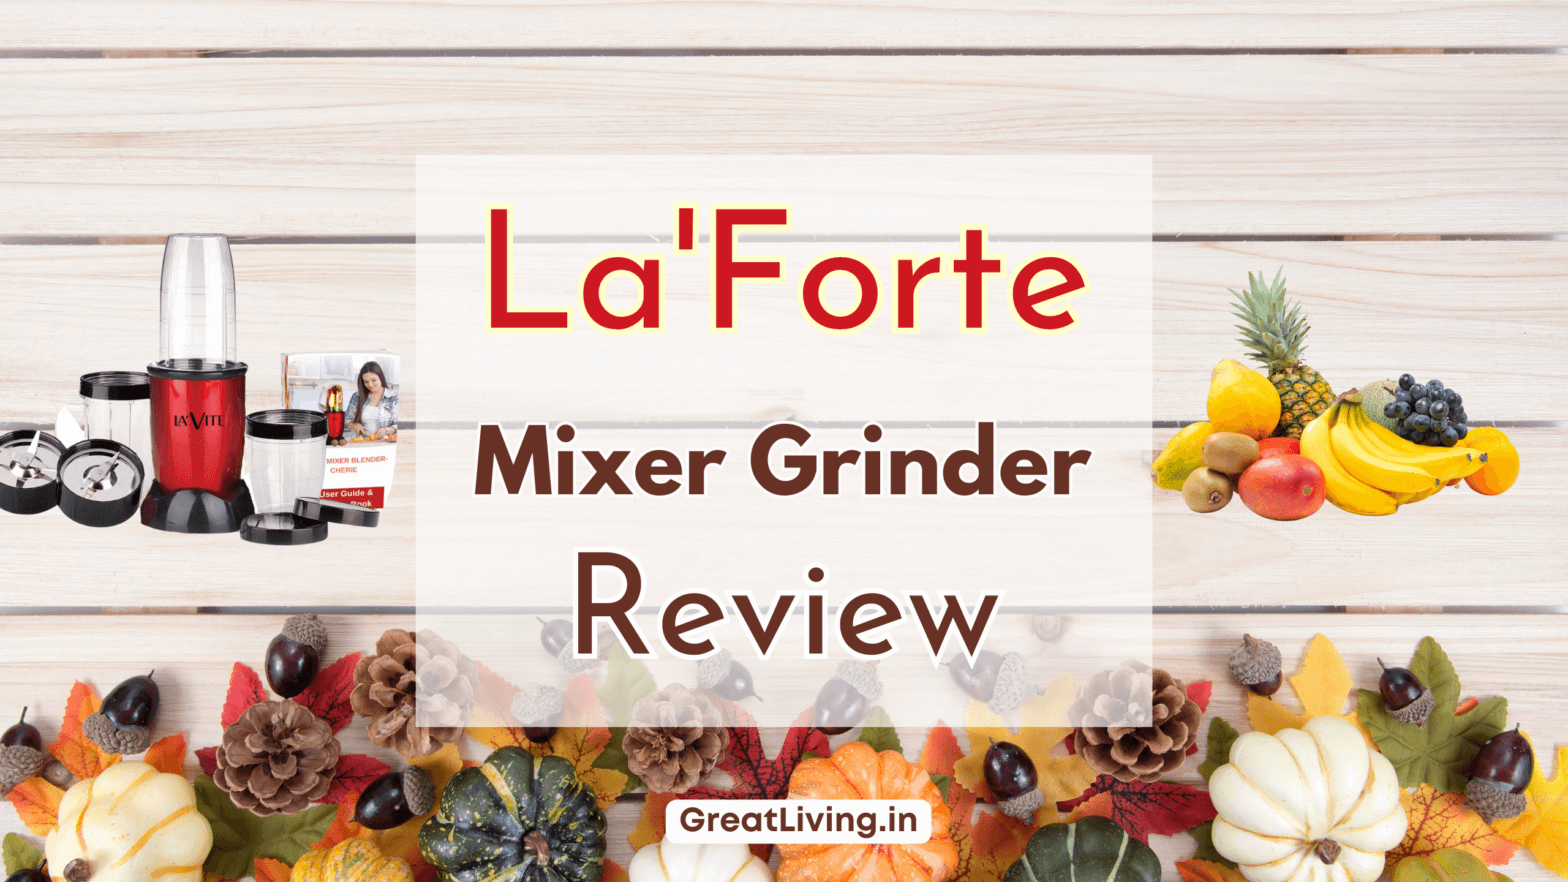 Laforte Mixer Grinder Review